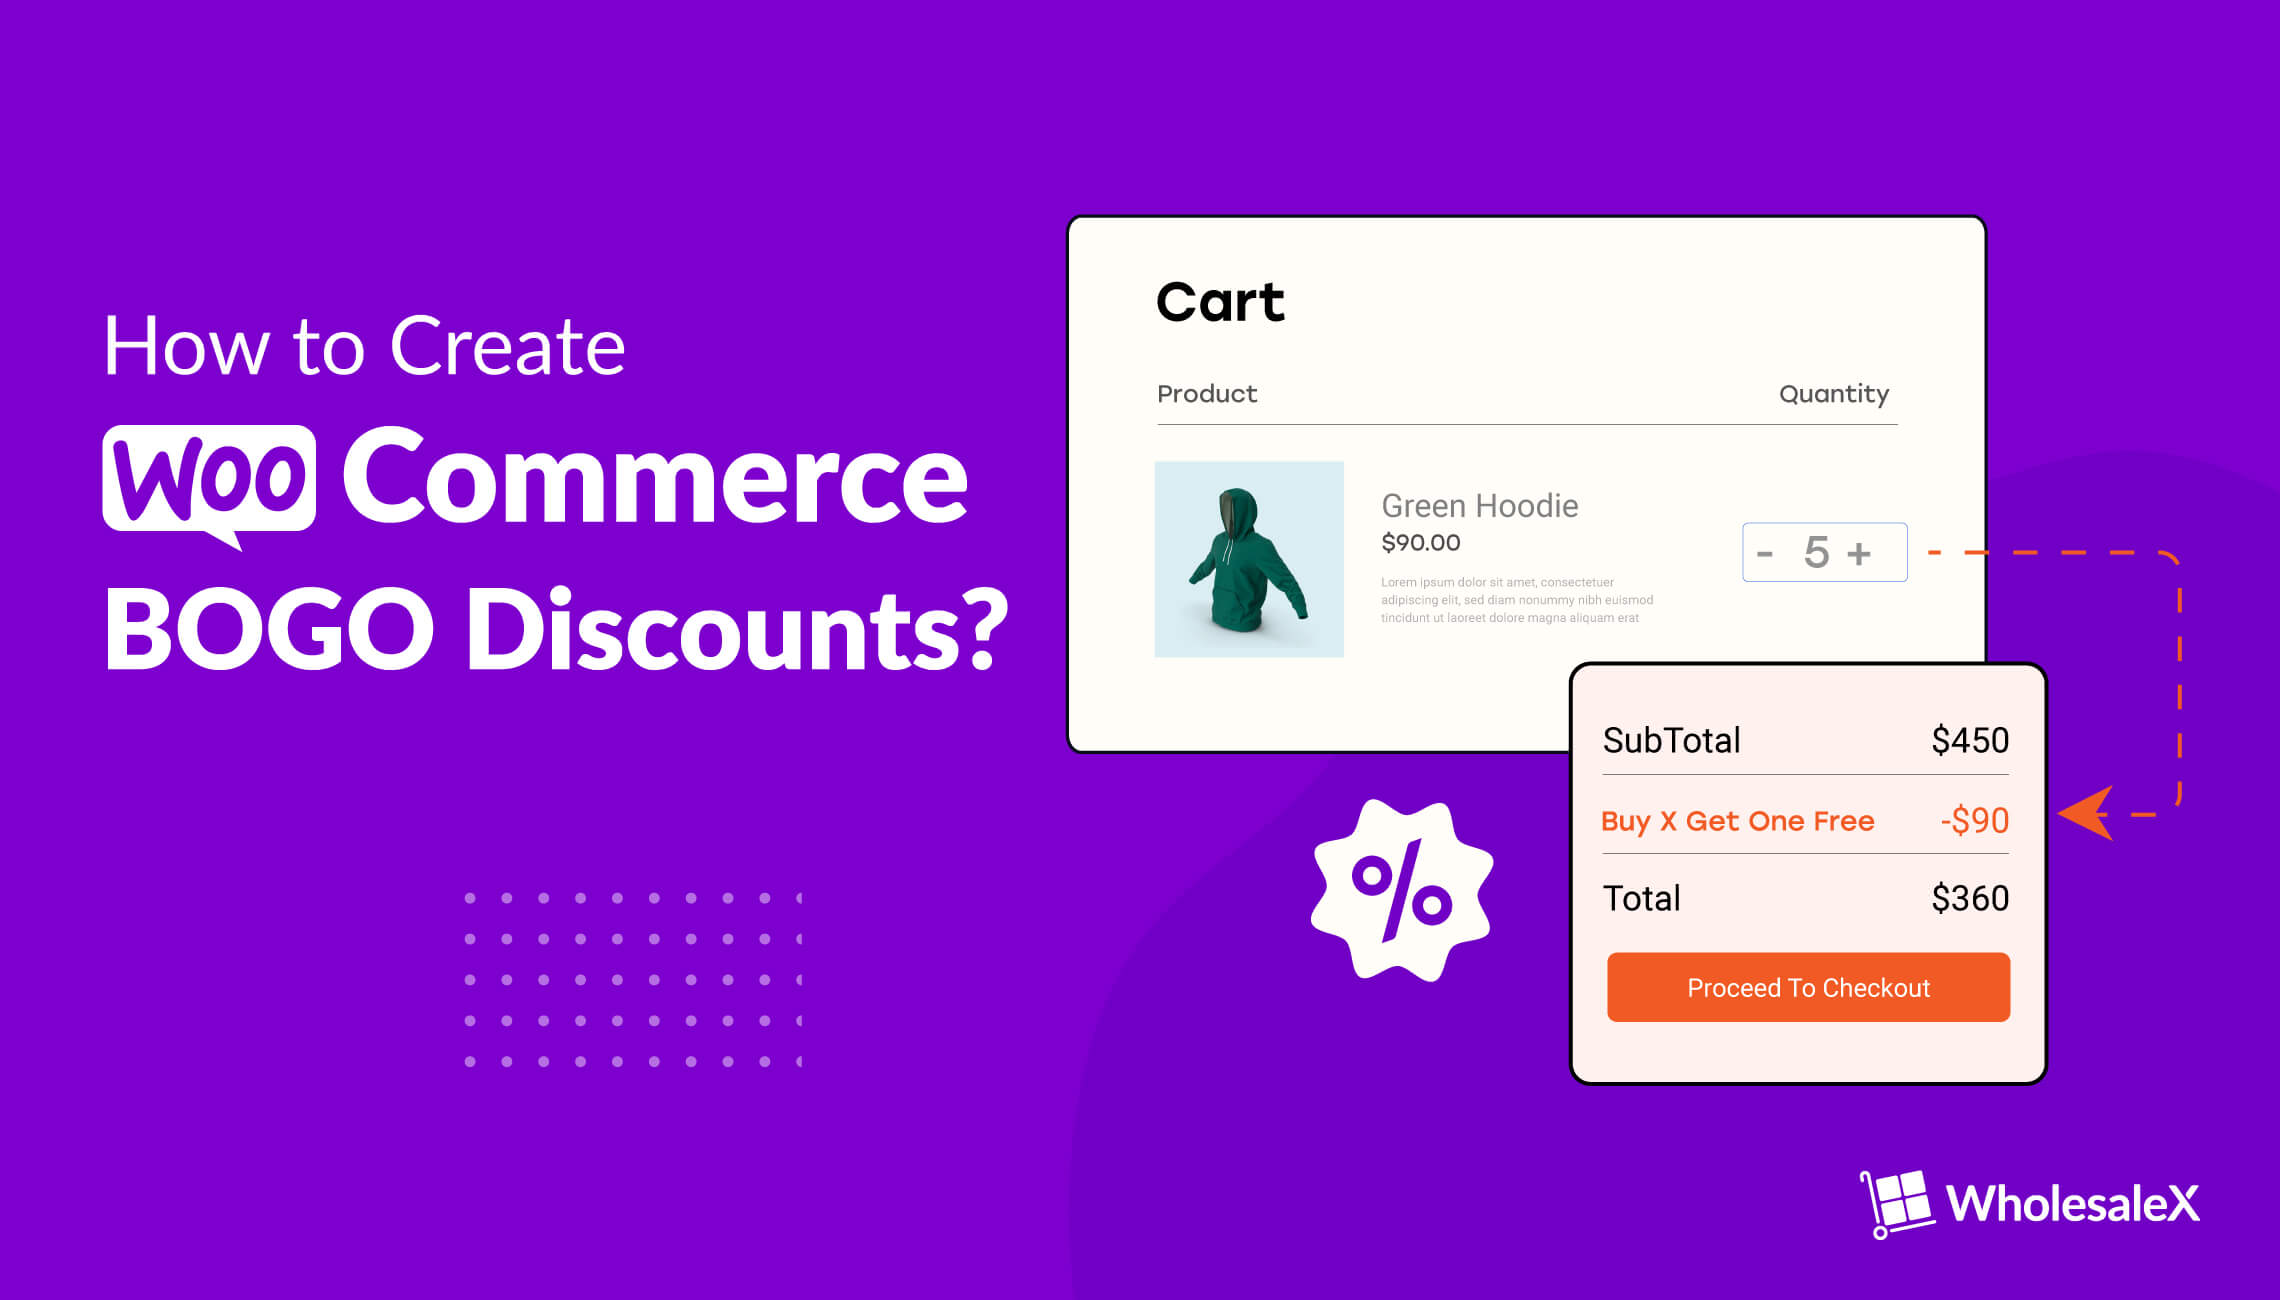 How to Create WooCommerce BOGO Discounts?